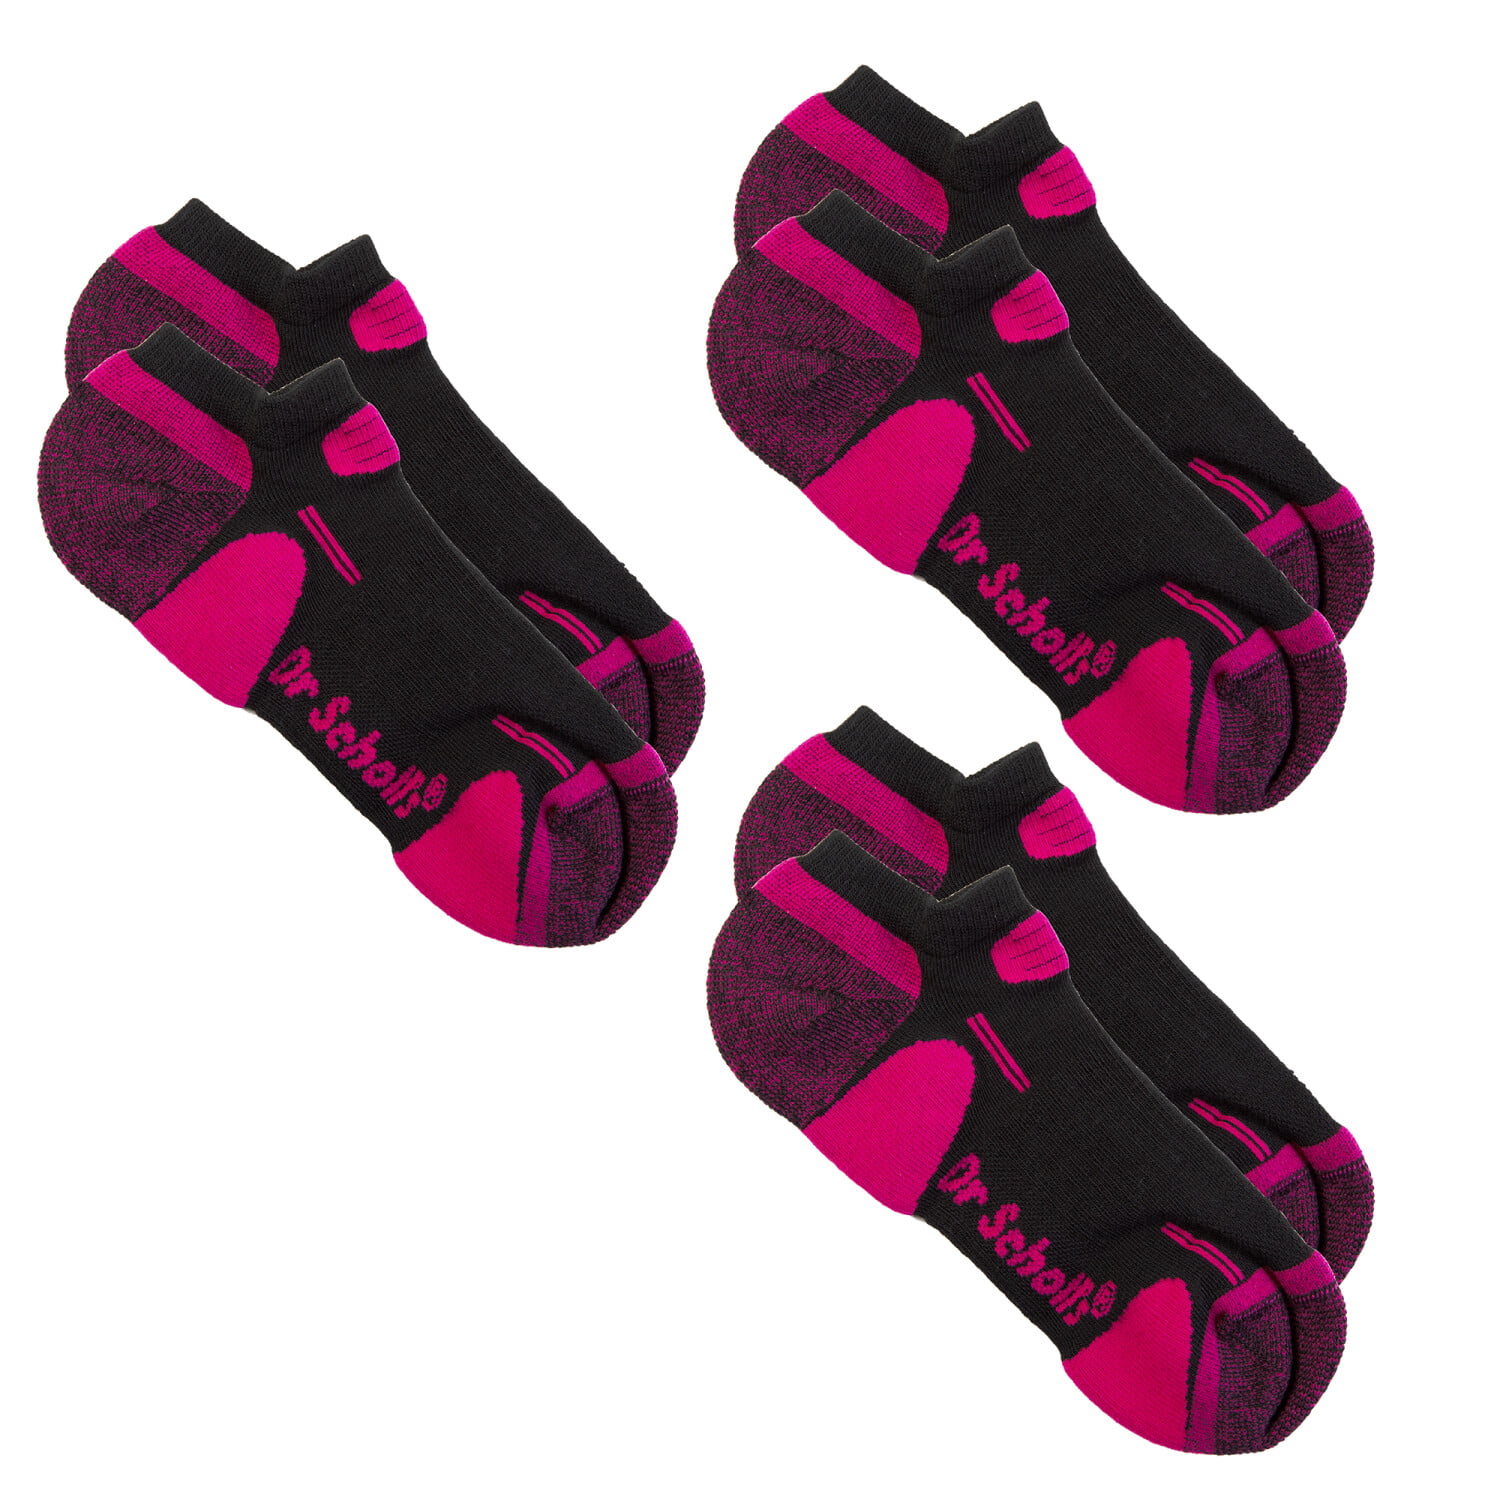 Scholls Women's Tri-Zone Comfort Low Cut Socks 3 Pack Apparel Details about   Dr